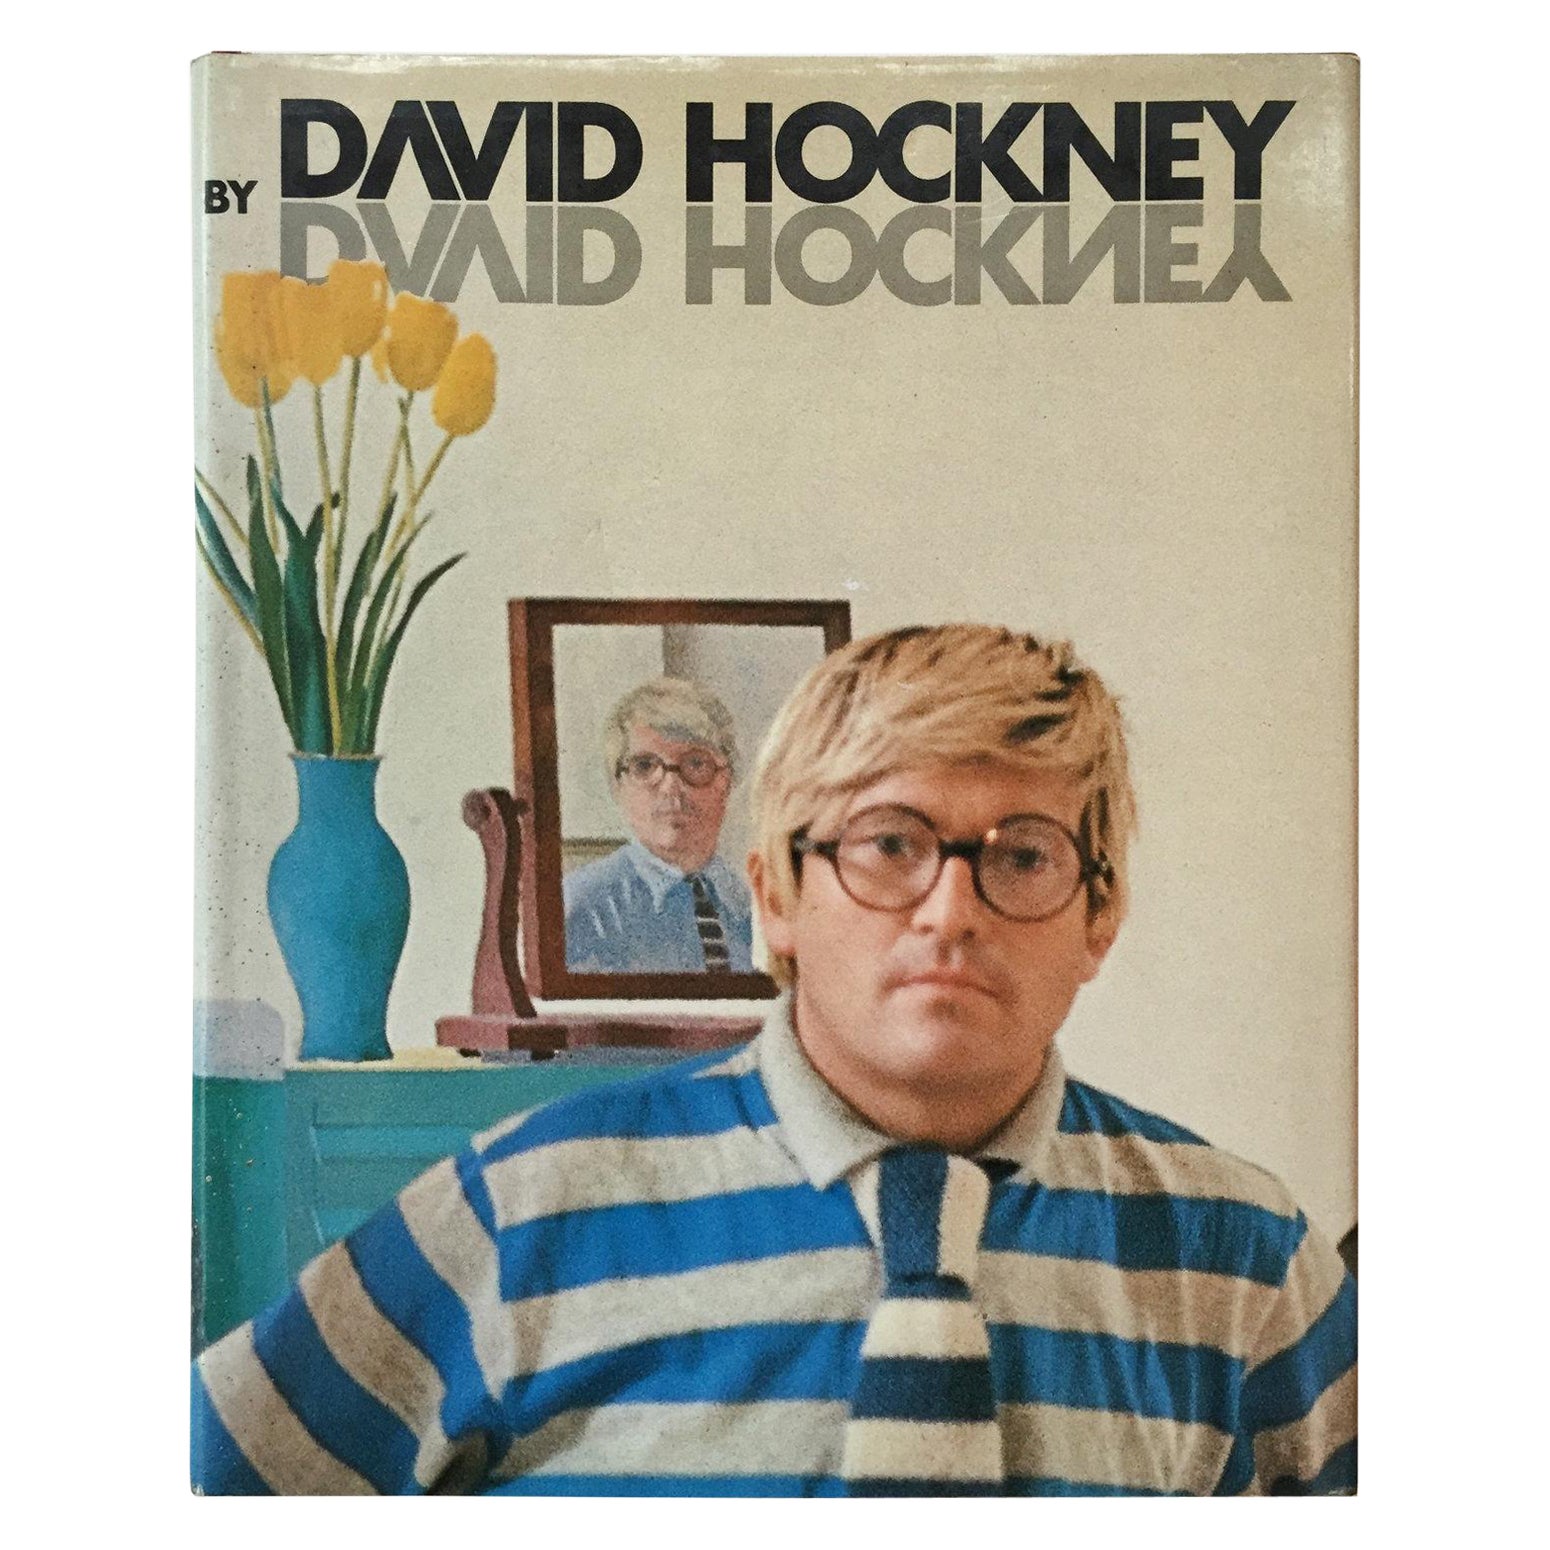 David Hockney by David Hockney, Thames & Hudson, London, 1977